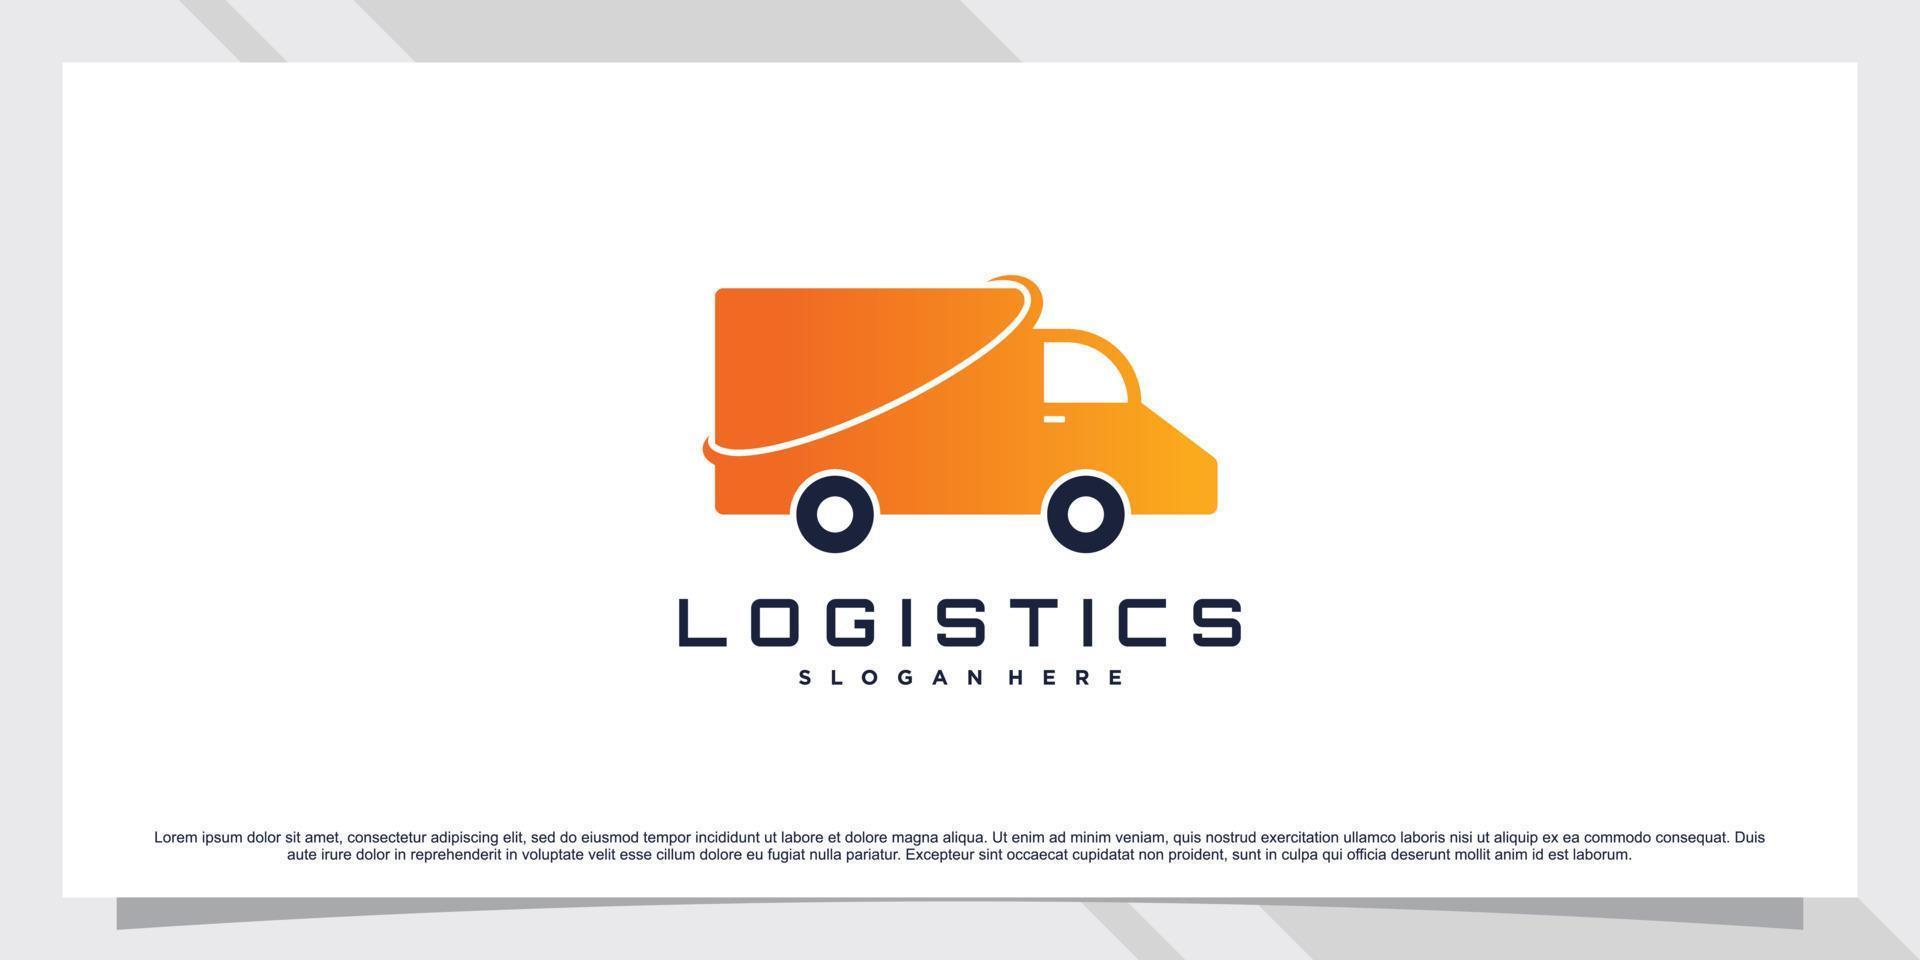 Logistik-LKW-Transport-Logo-Design-Inspiration für Unternehmen vektor